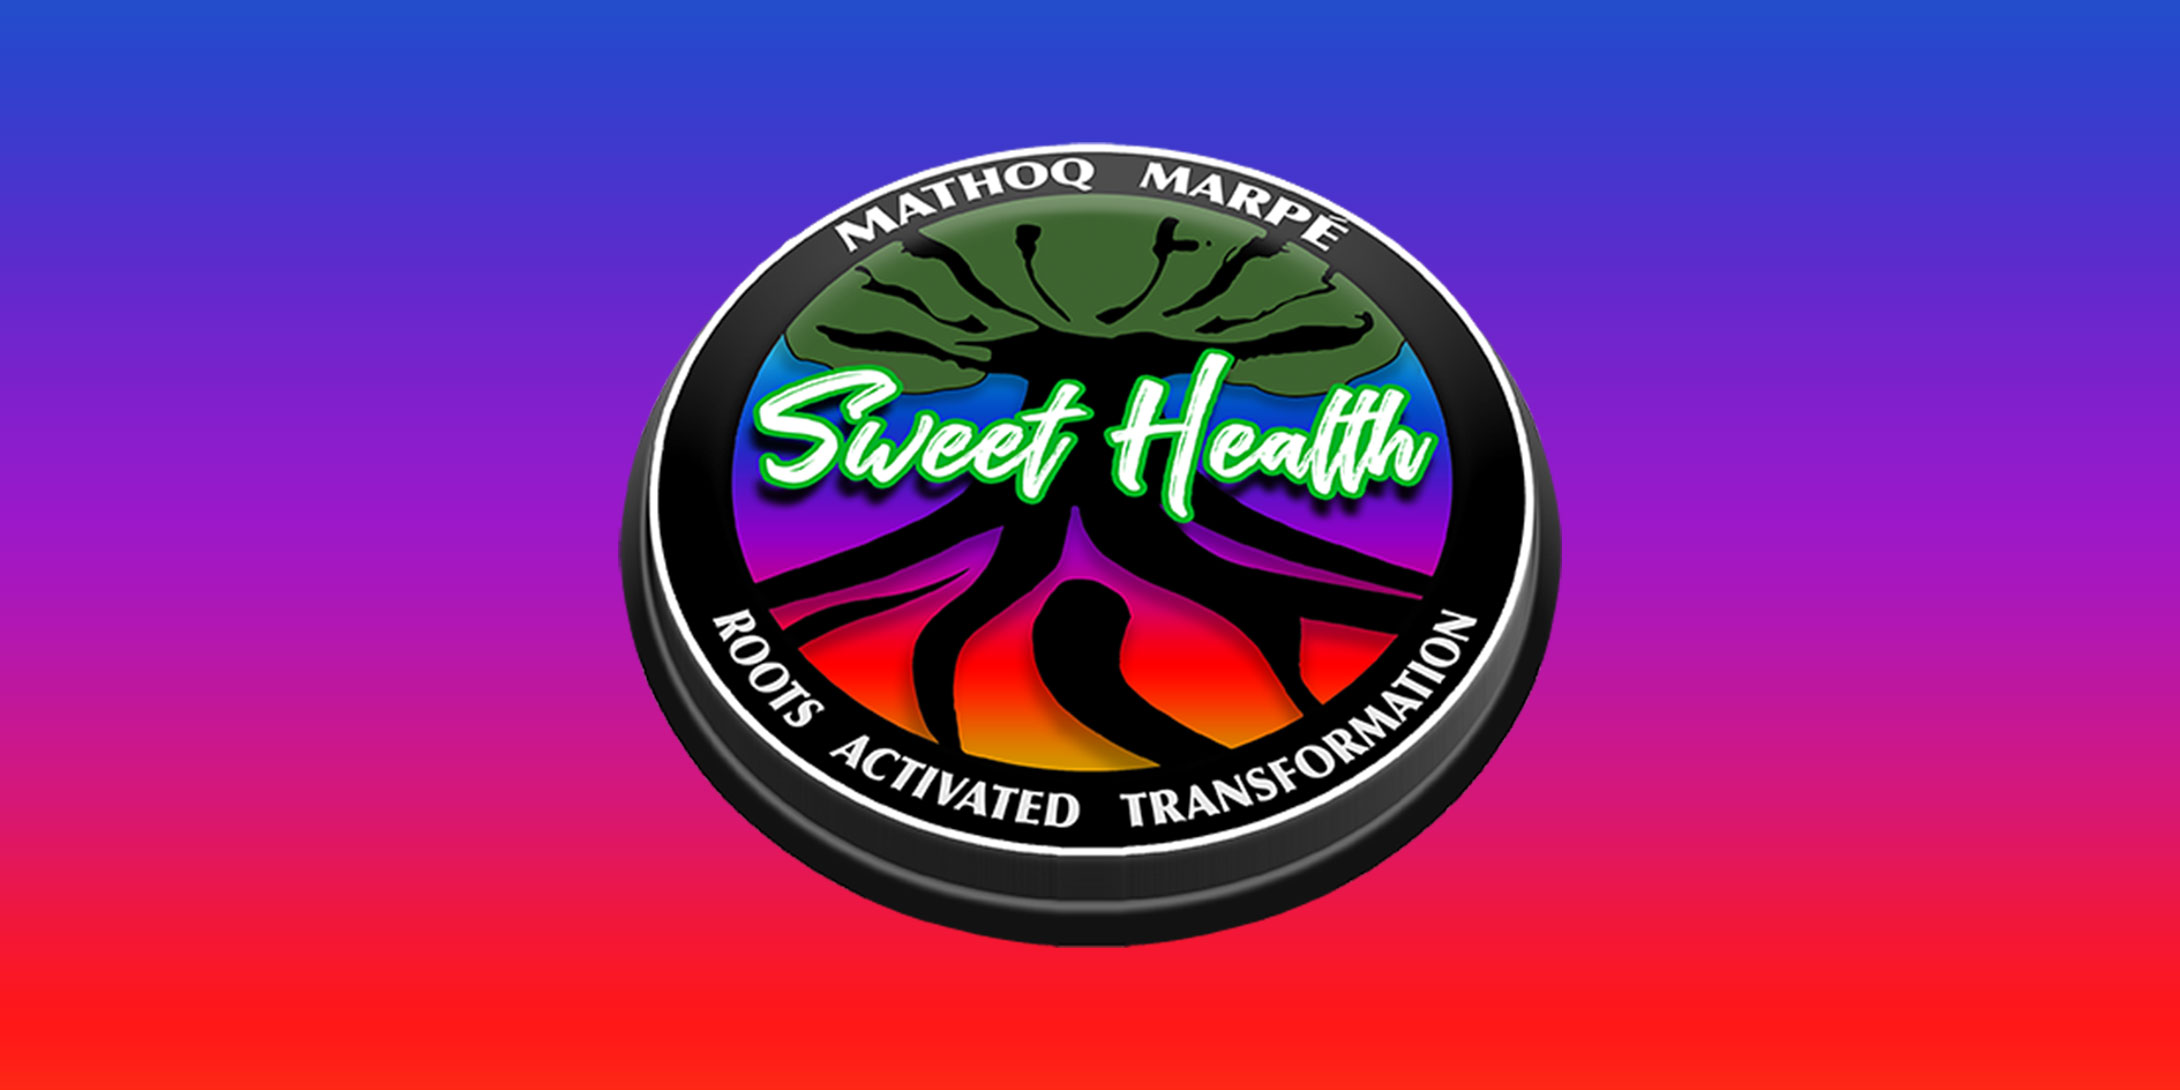 mathoq-marpe-sweet-health-feature